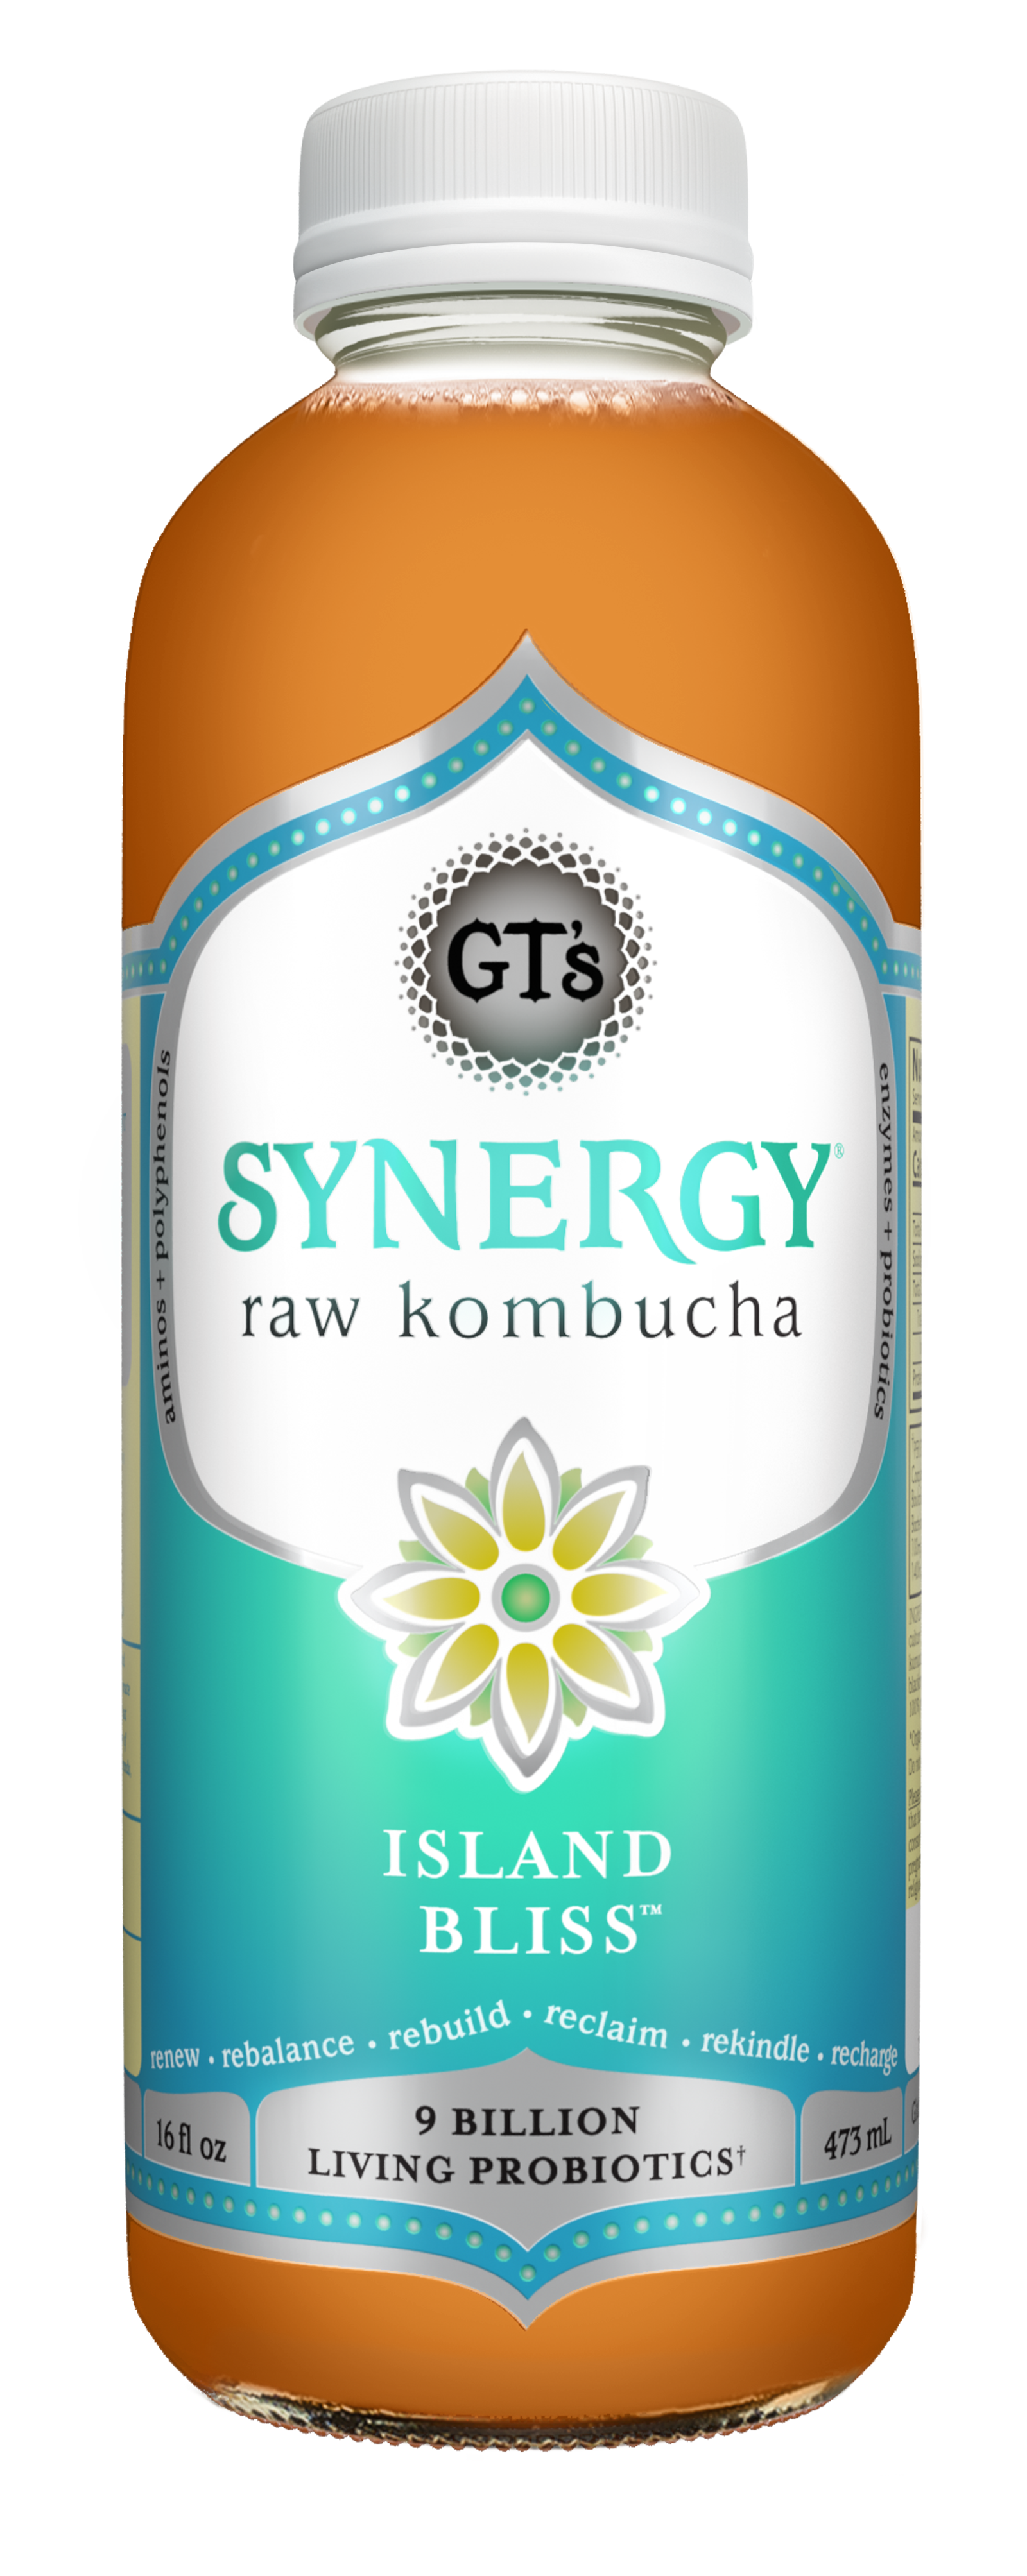 GT's Synergy Kombucha Organic Island Bliss, Refrigerated, 16 fl oz - image 1 of 5